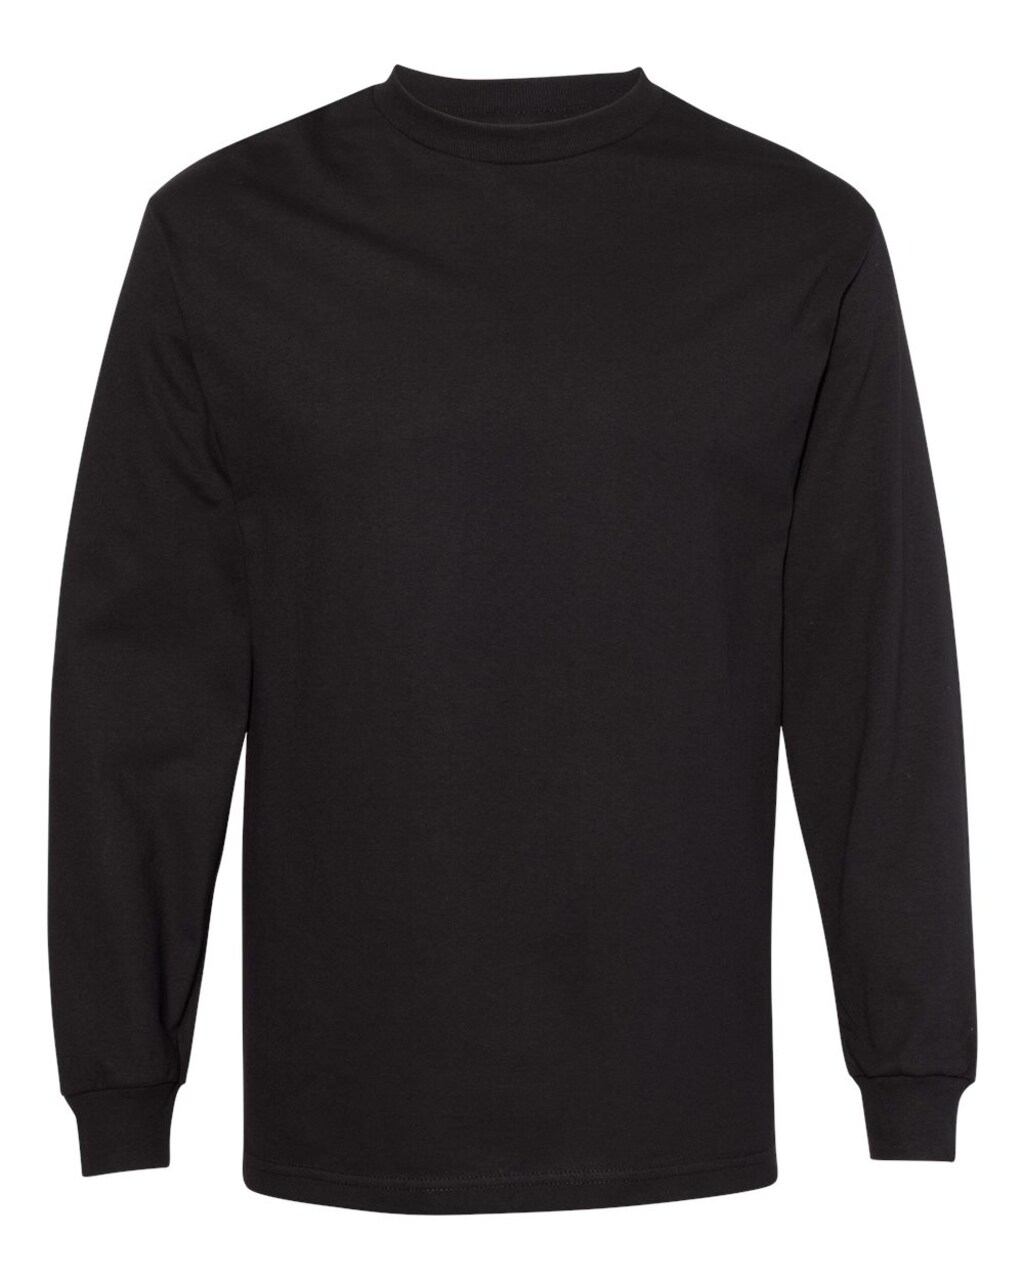 American Apparel 1304 Unisex Heavyweight Cotton Long Sleeve T-Shirt - T- shirt.ca